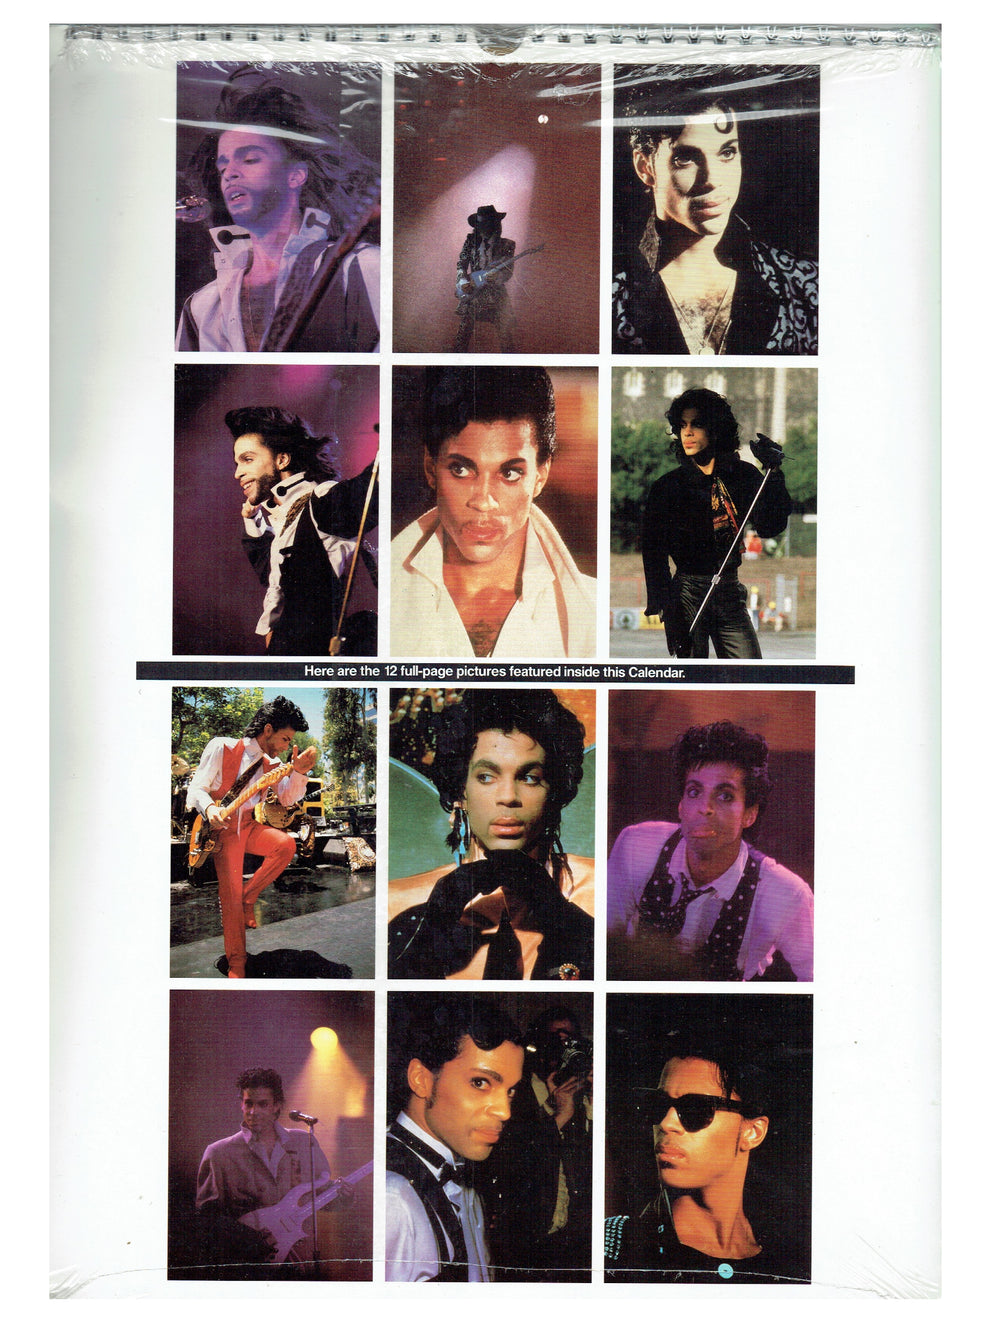 Prince Calendar 1993 Copyright Approved